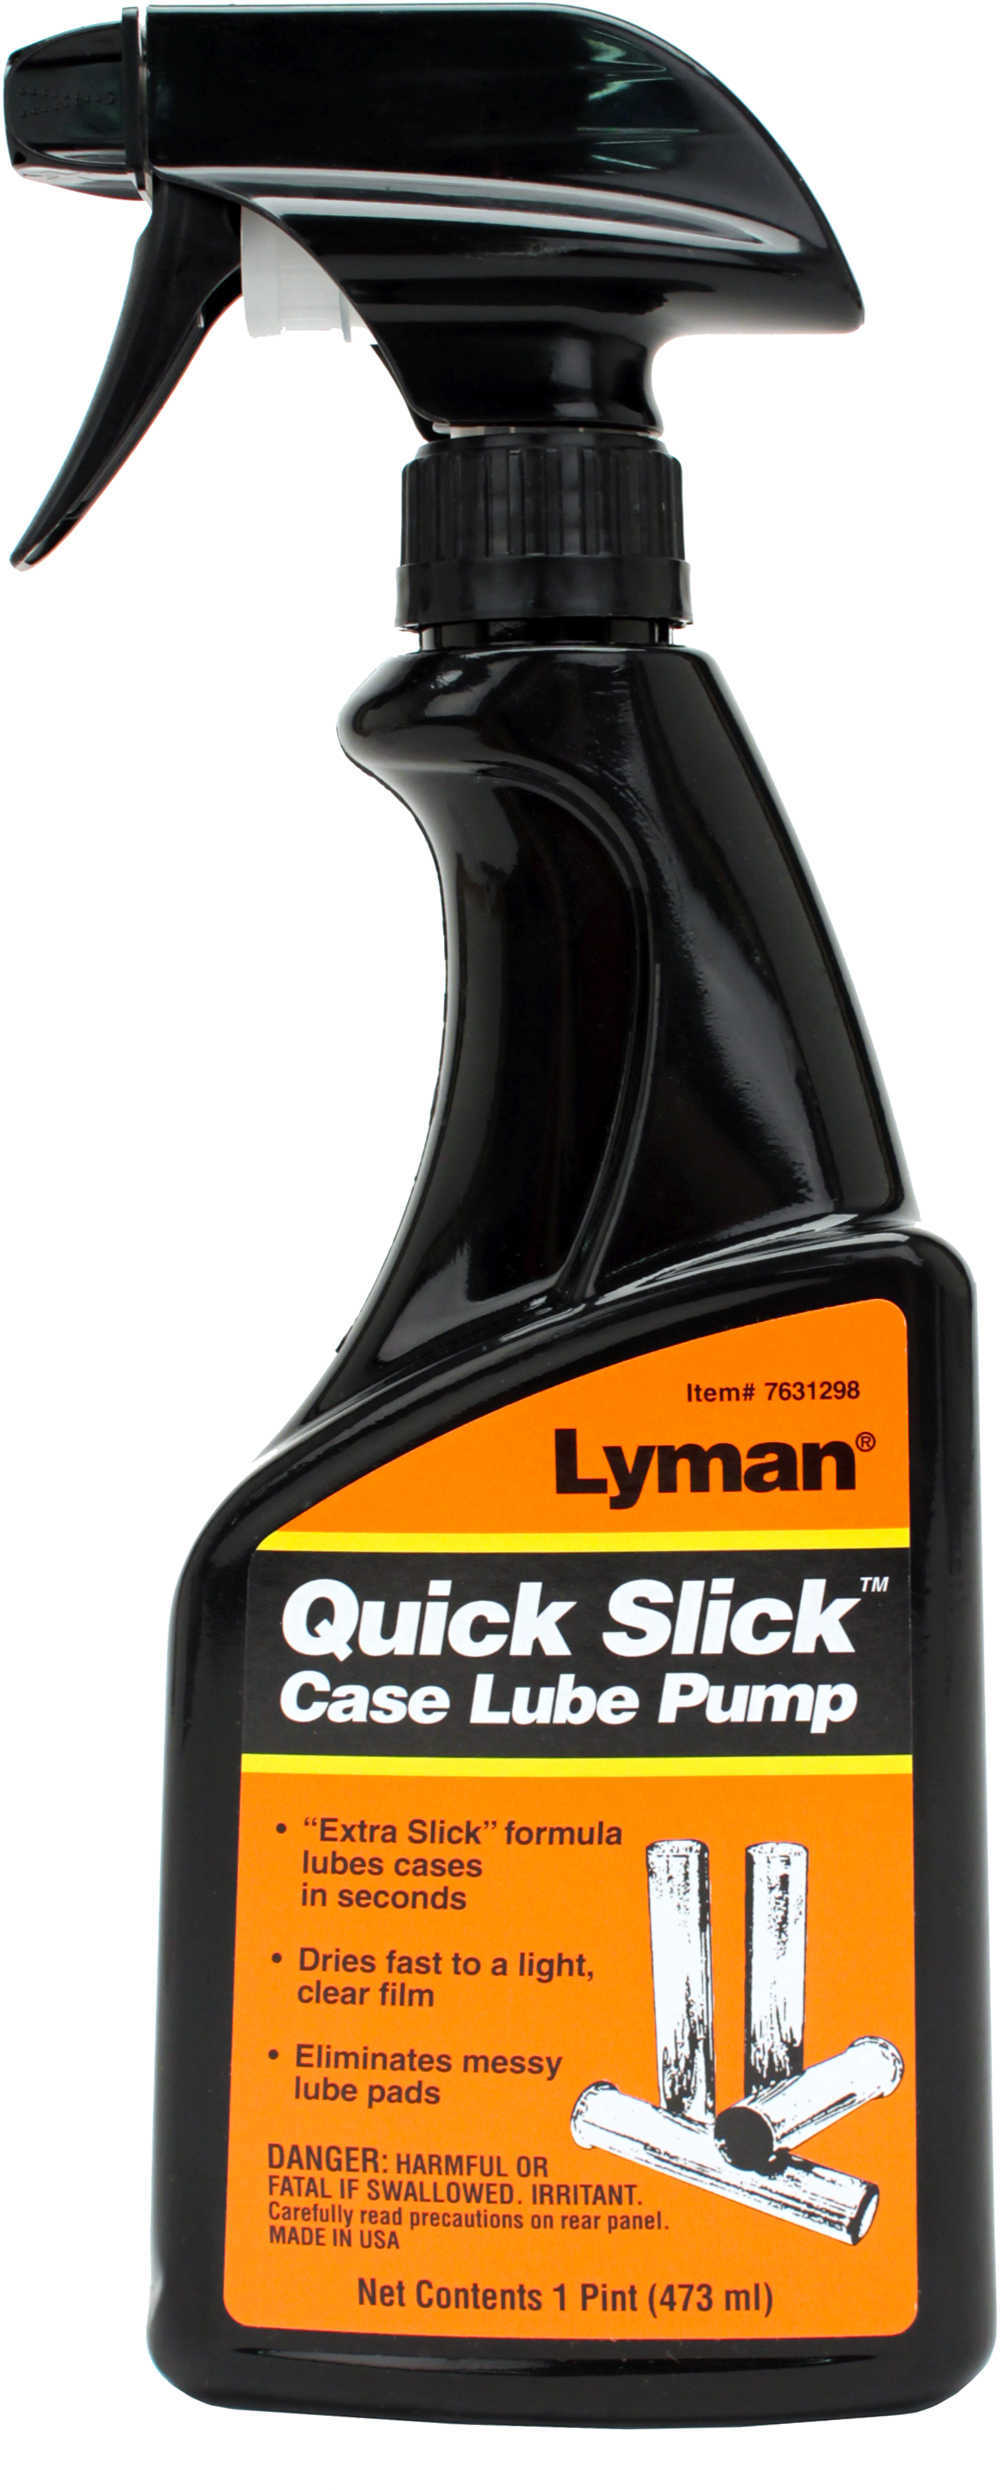 Lyman Case Lube Spray 16 Oz. Pump Bottle